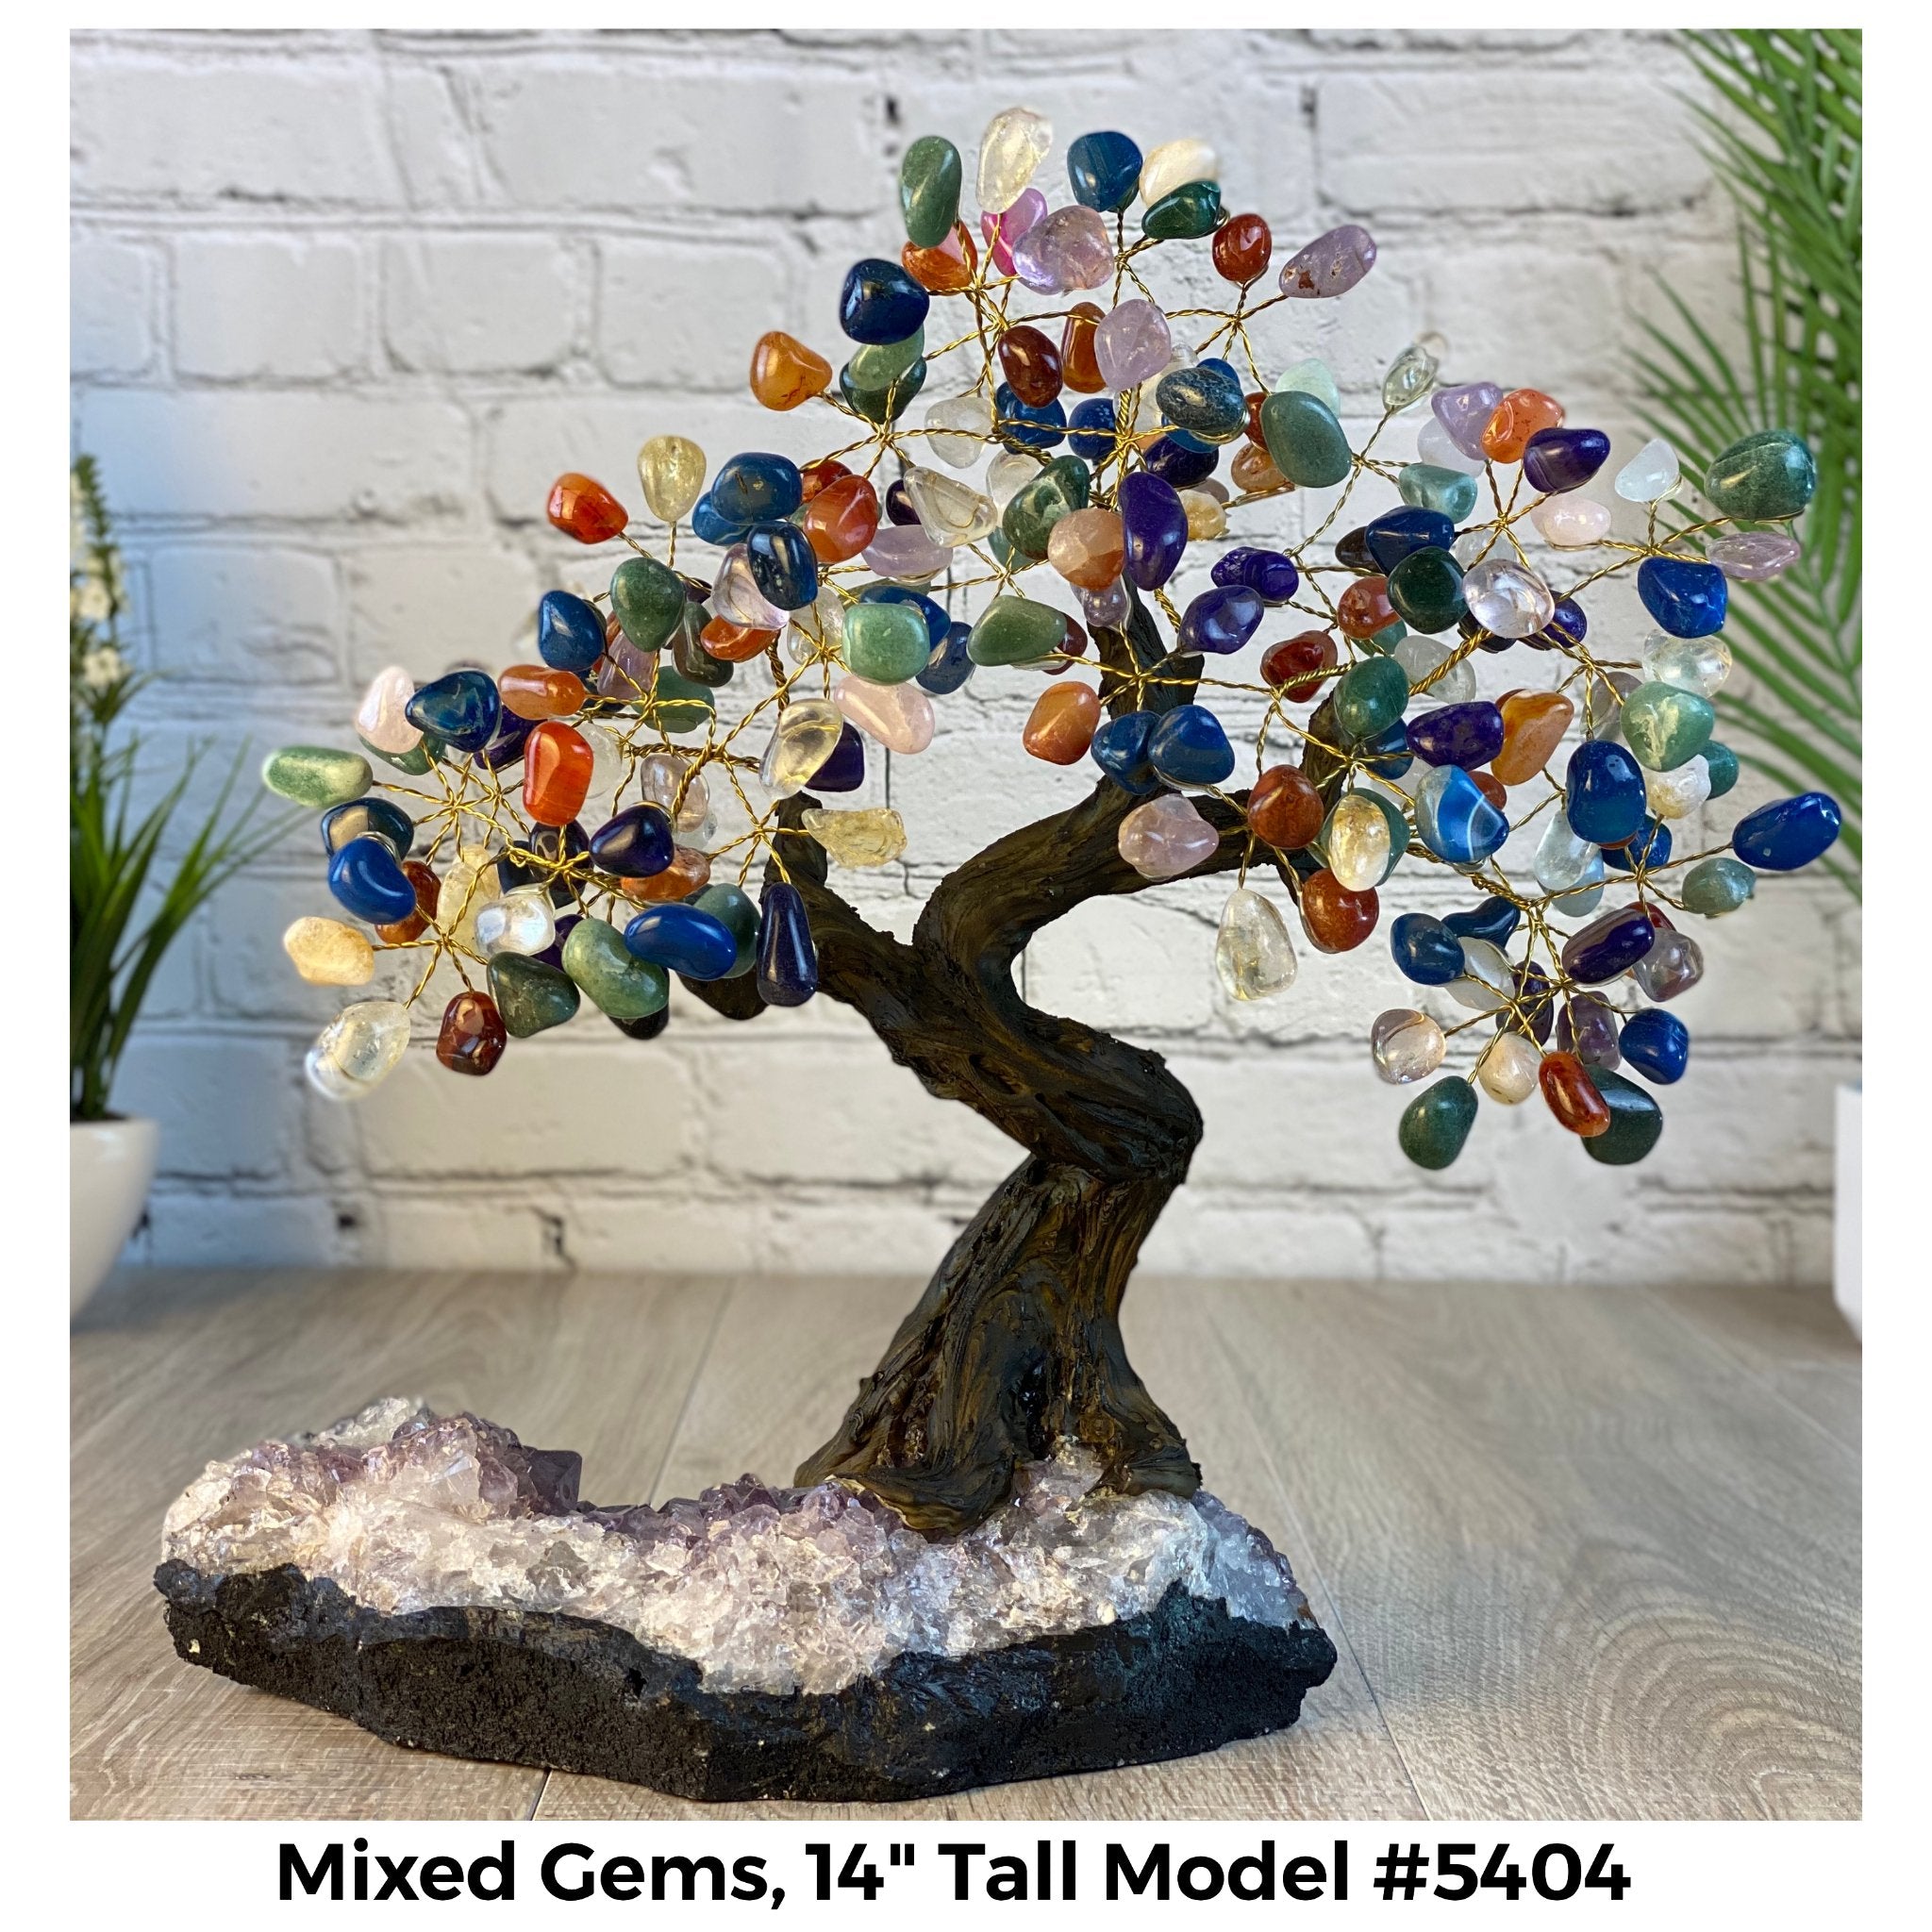 Mixed Gems 14" Tall Handmade Gemstone Tree on a Crystal base, 180 Gems #5404MIXD - Brazil GemsBrazil GemsMixed Gems 14" Tall Handmade Gemstone Tree on a Crystal base, 180 Gems #5404MIXDGemstone Trees5404MIXD